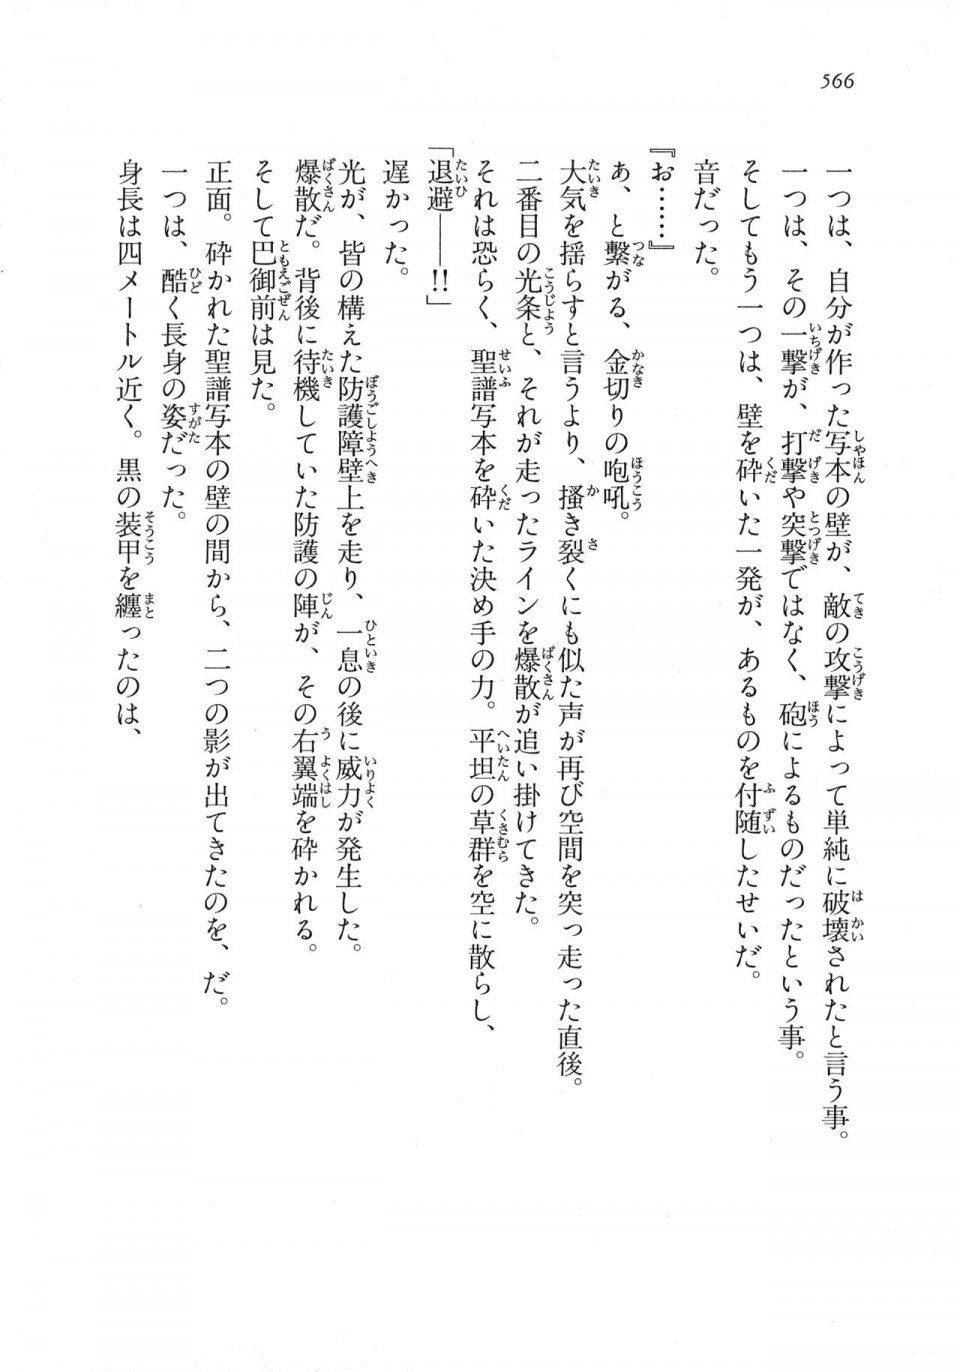 Kyoukai Senjou no Horizon LN Vol 18(7C) Part 2 - Photo #6